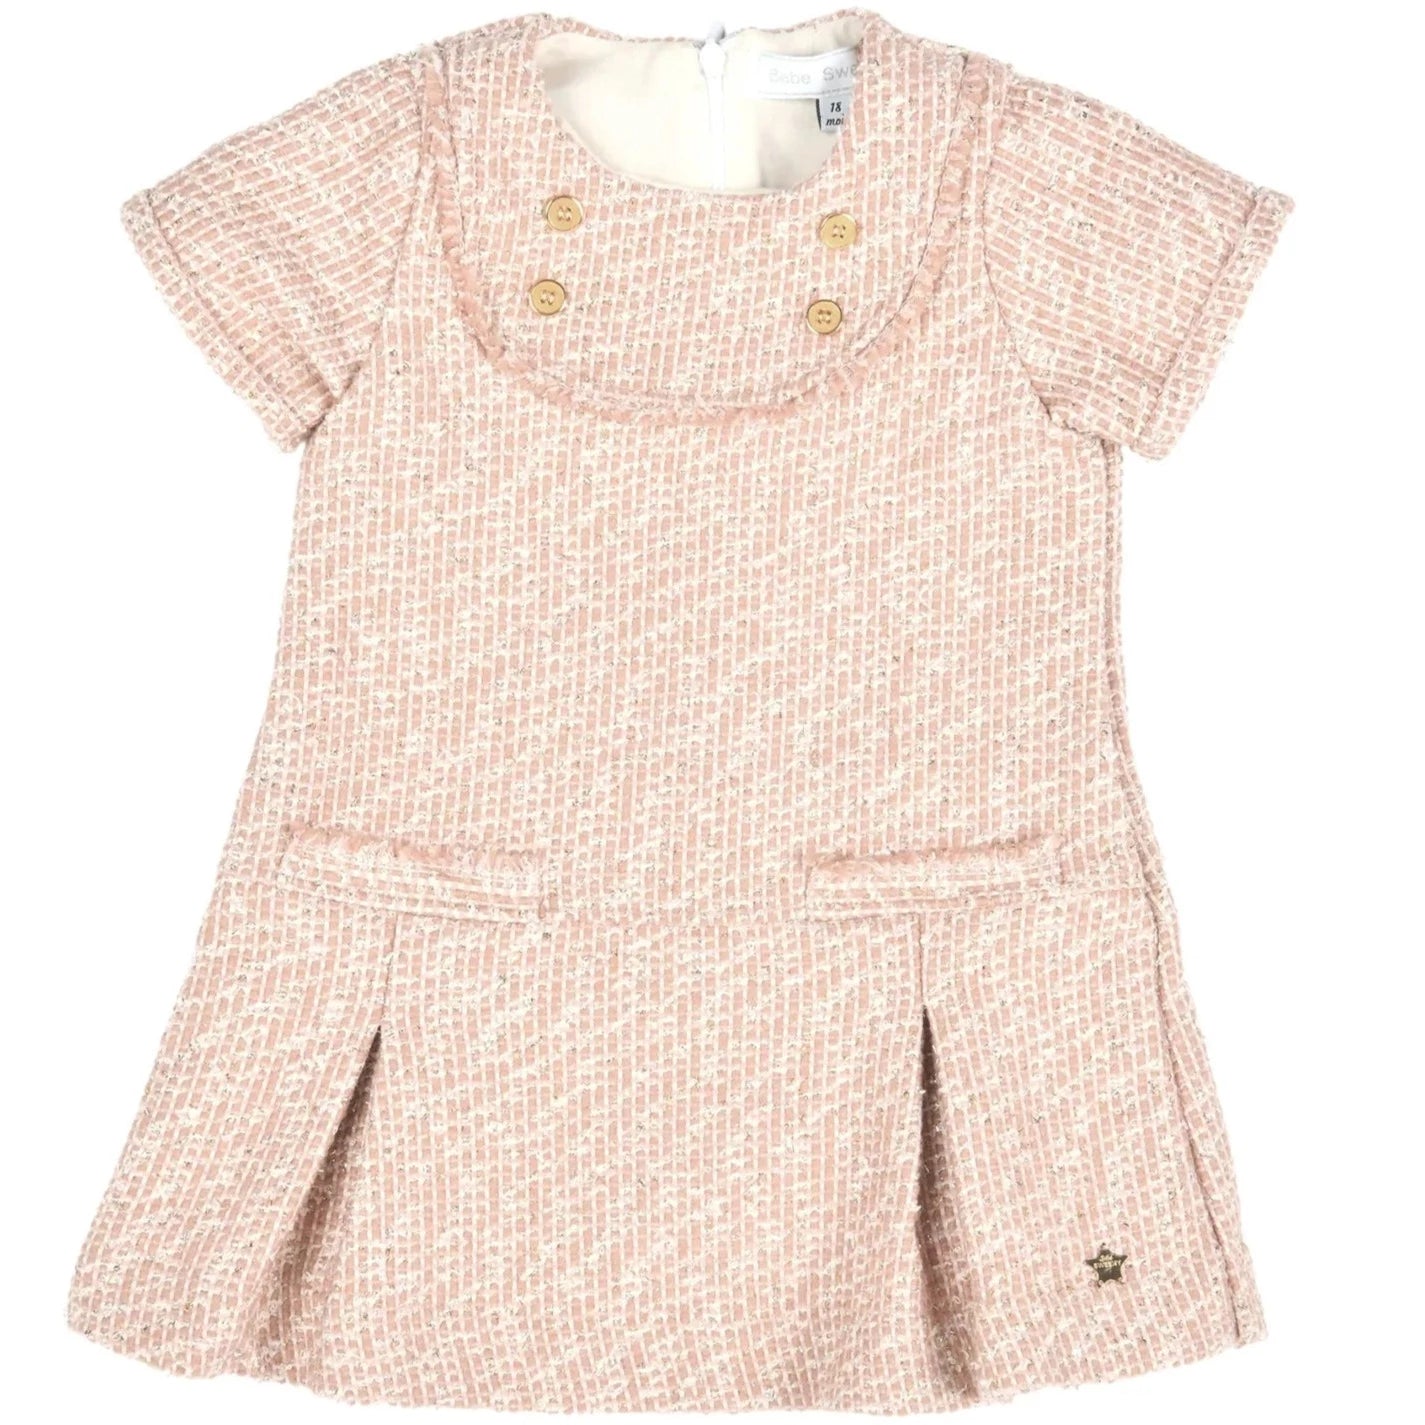 Bébé Sweeny Bridgette Dress in Grey/ Pink & Gold Tweed for Baby Girls 18 m - 4Y - CapuletKids